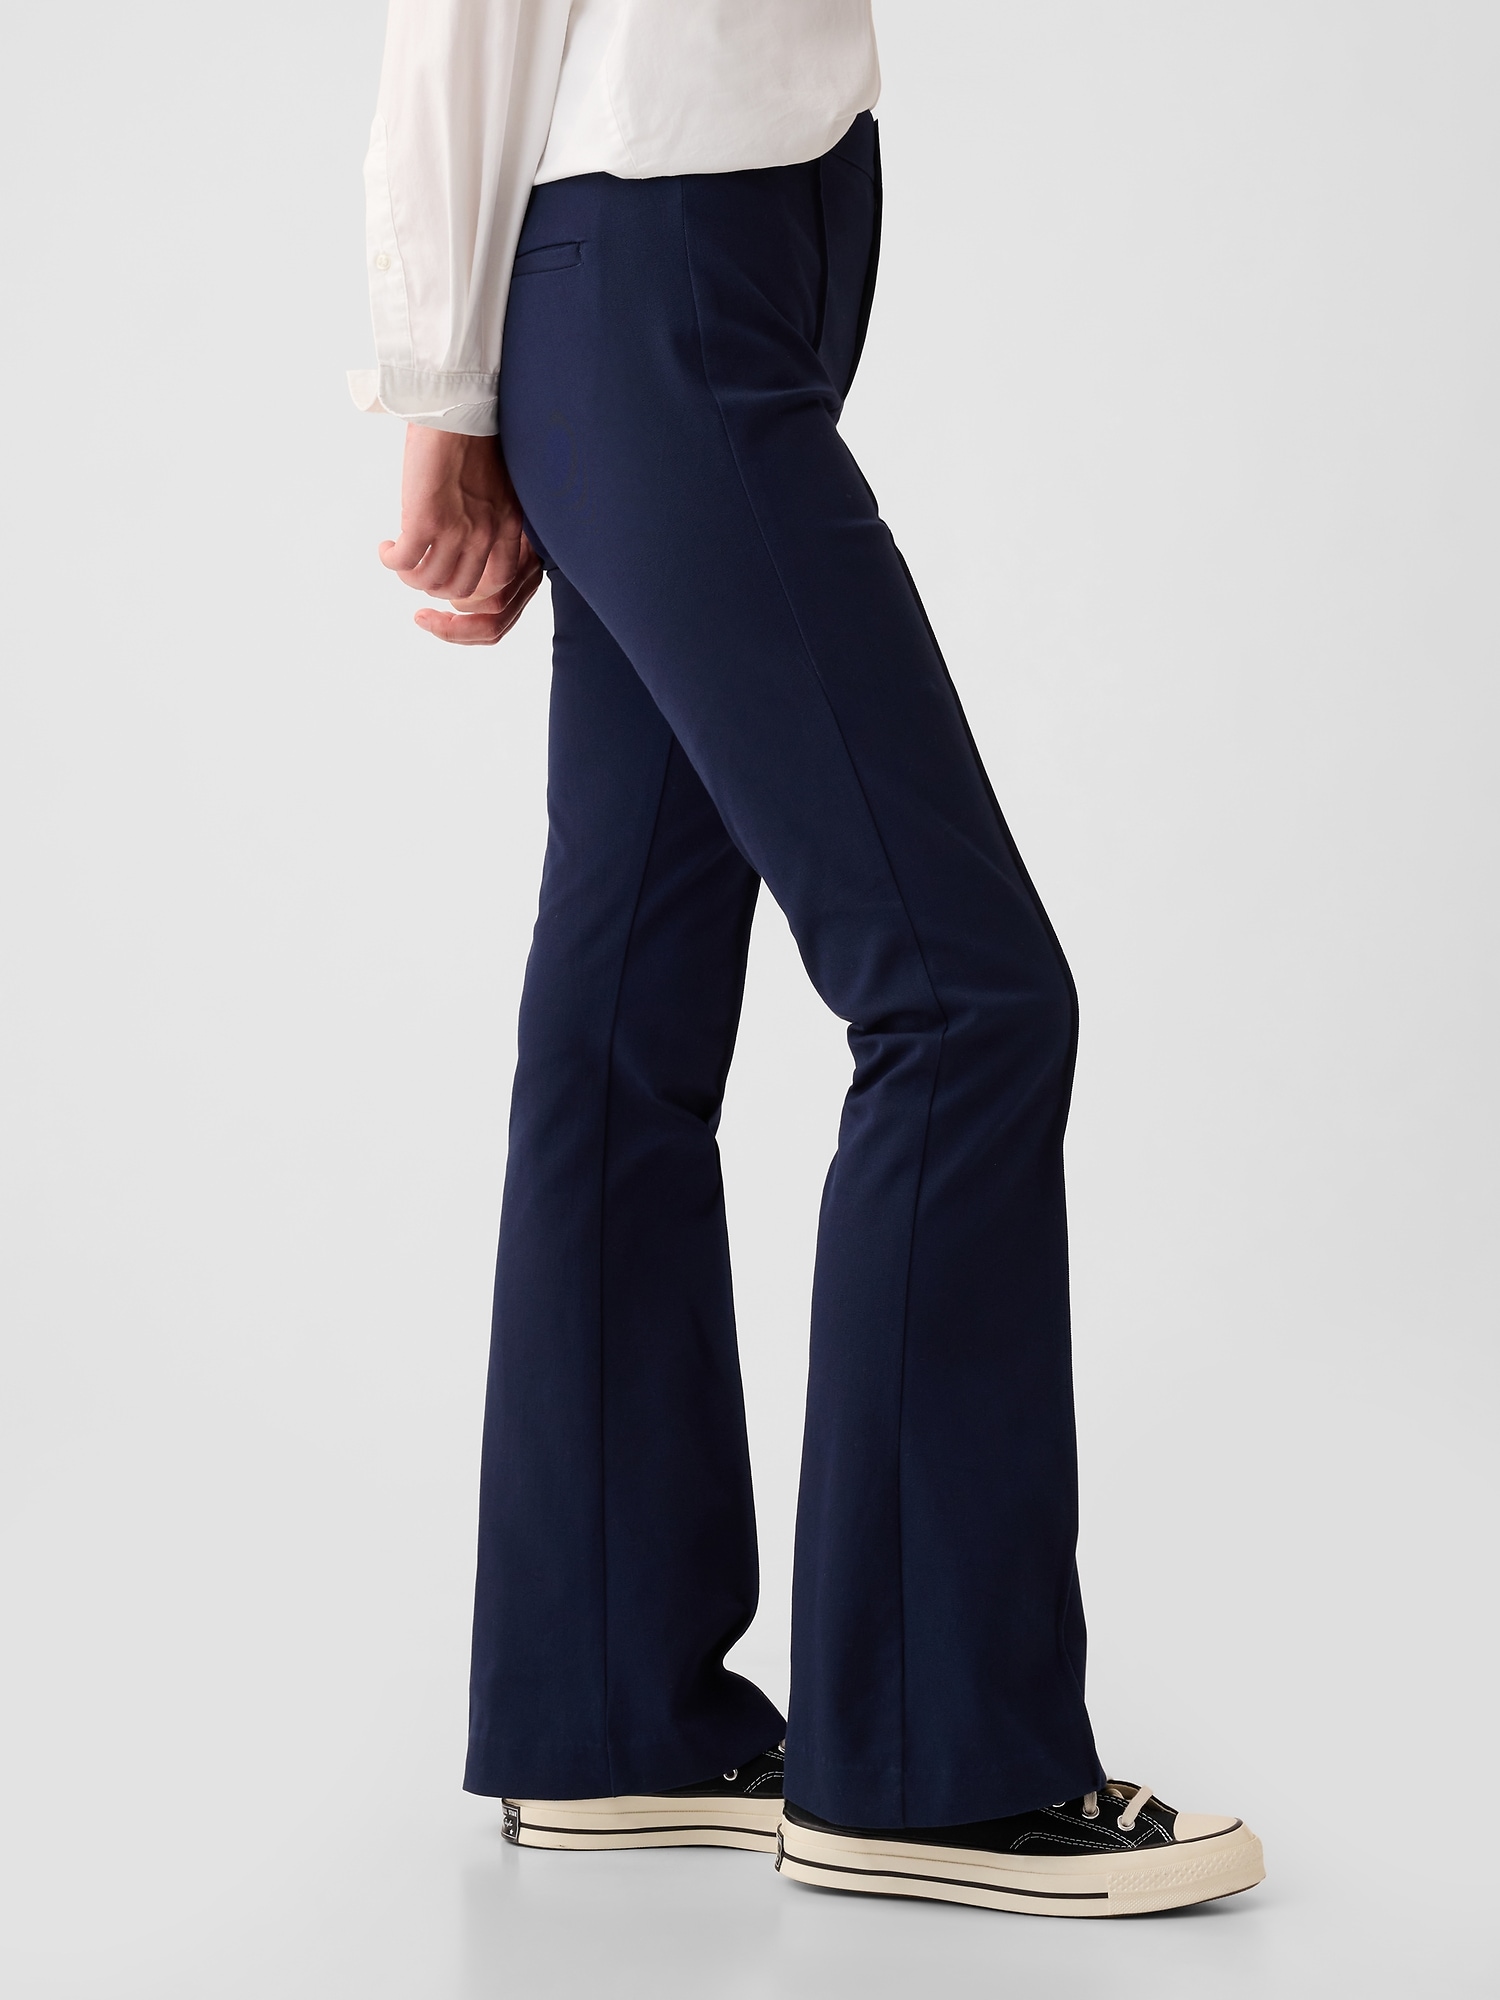 Buy Gap High Waisted 70s Flare Velvet Trousers from the Gap online shop